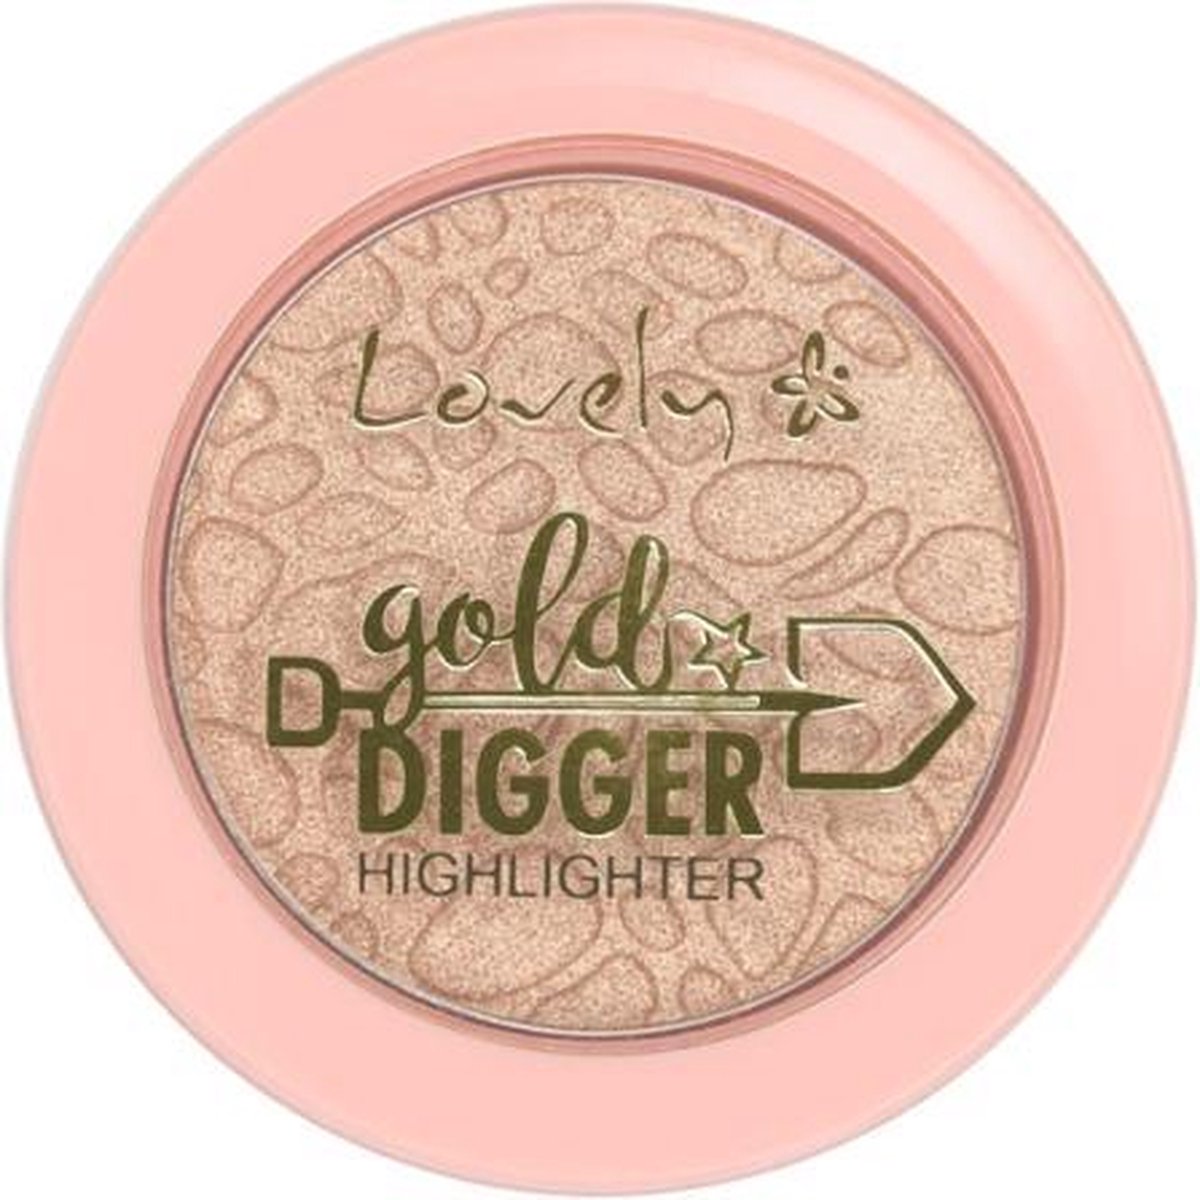 Lovely Gold Digger Highlighter